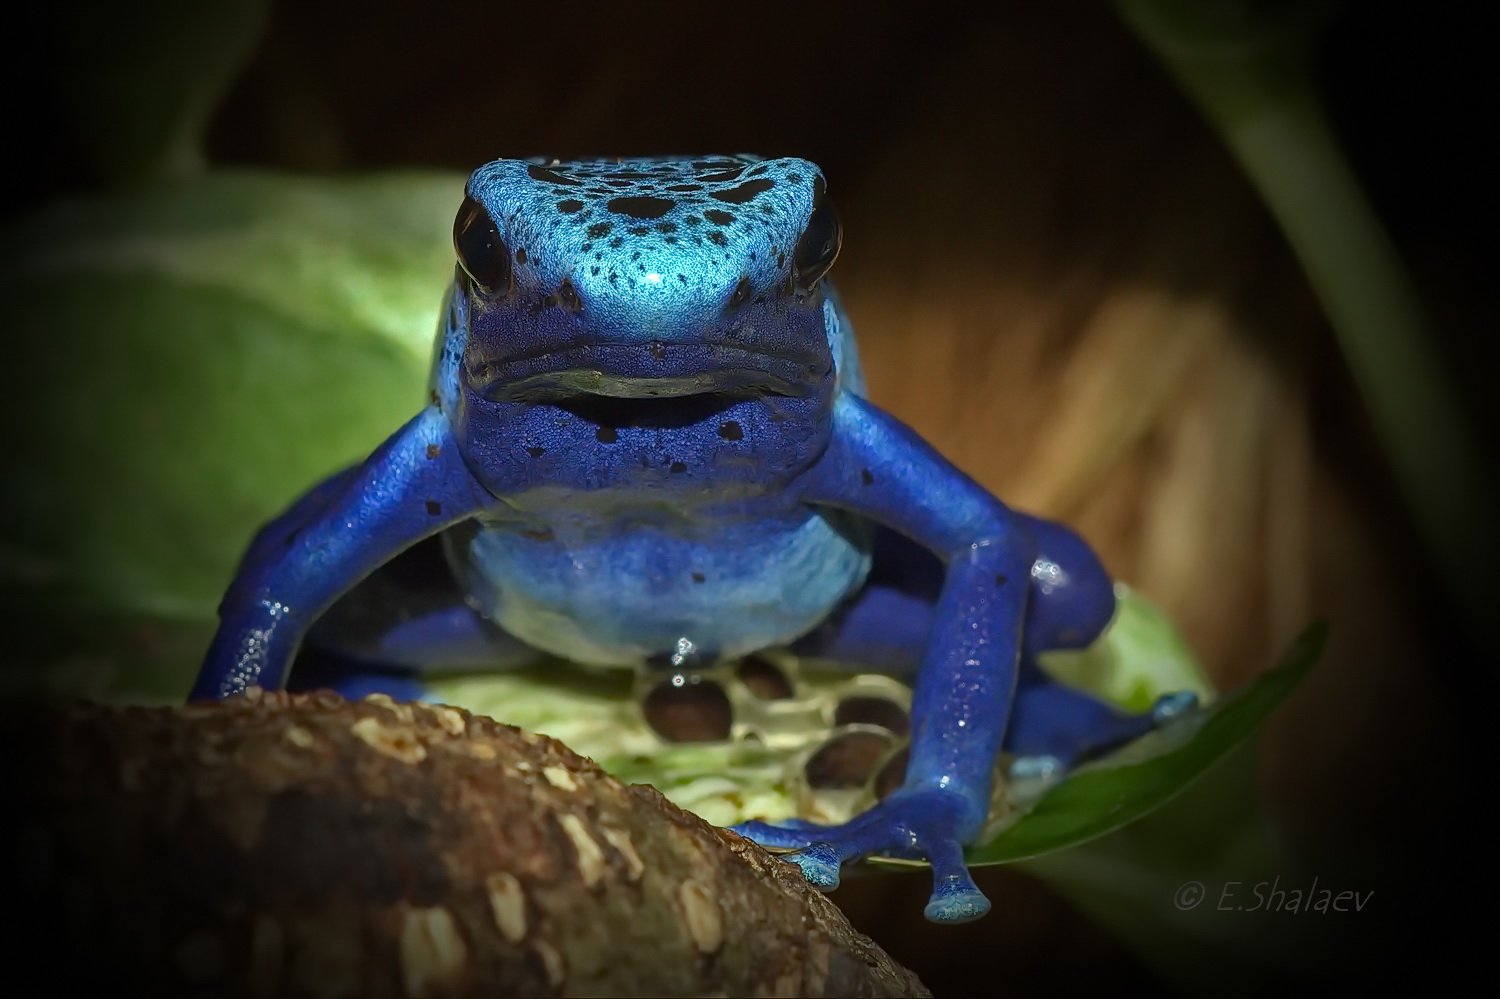 Blue poison dart frog, Dendrobates azureus, Frog, Амфибии, Древолаз, Древолаз голубой, Лягушка, Евгений